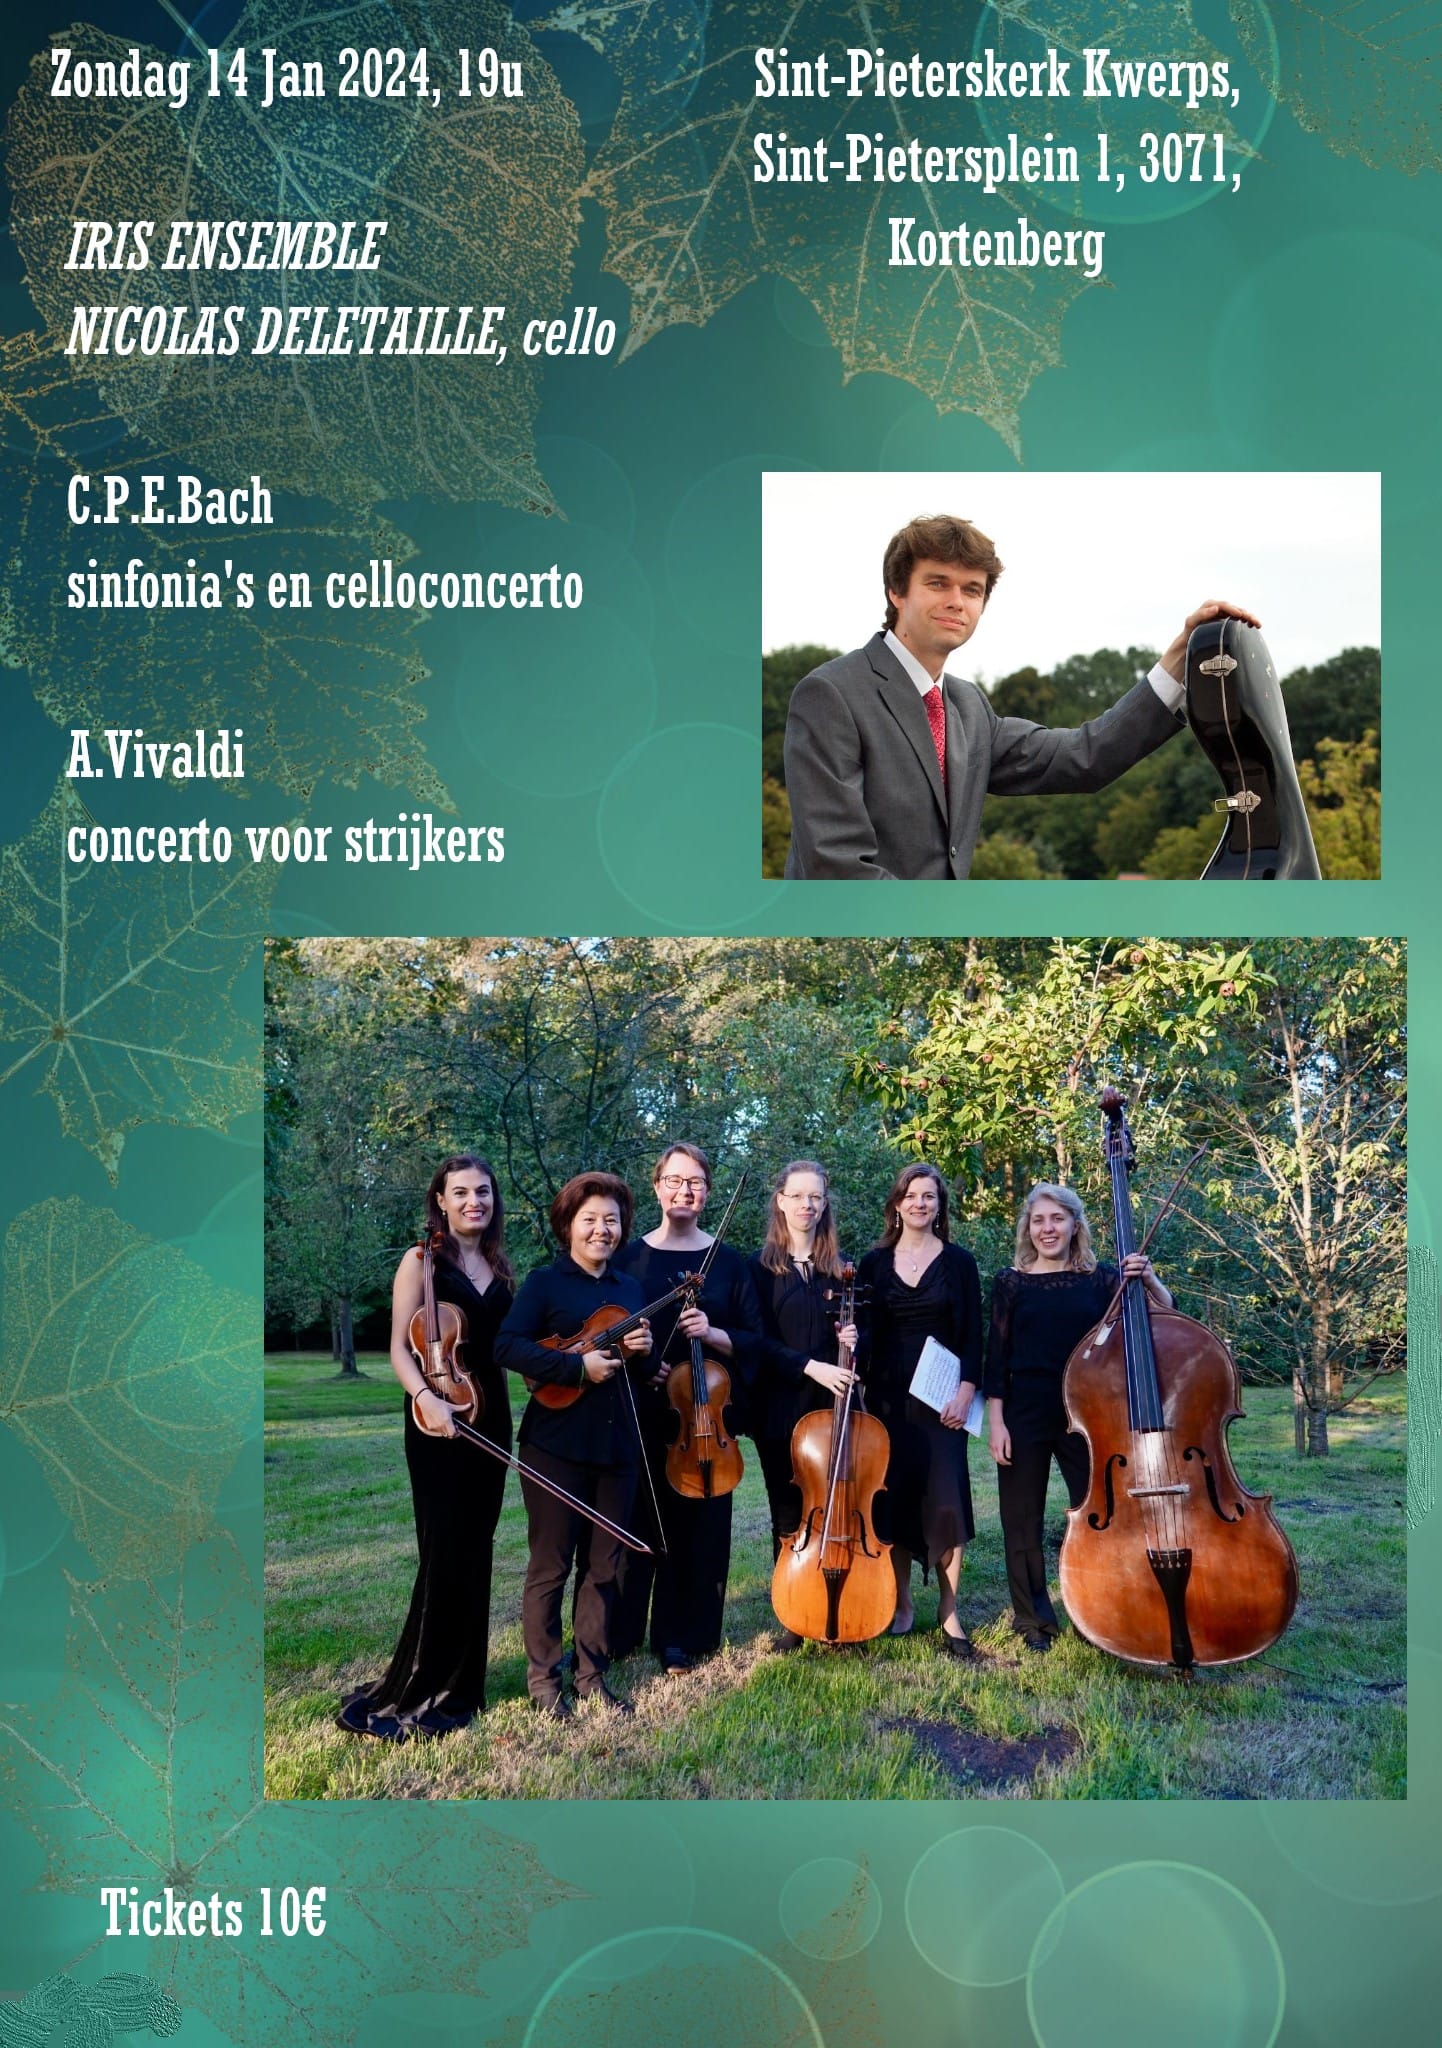 Affiche. Iris Ensemble - Nicolas Deletaille, cello. C.P.E.Bach simfonia|s en celloconcerto - A. Vivaldi concerto for strijkers. 2024-01-14